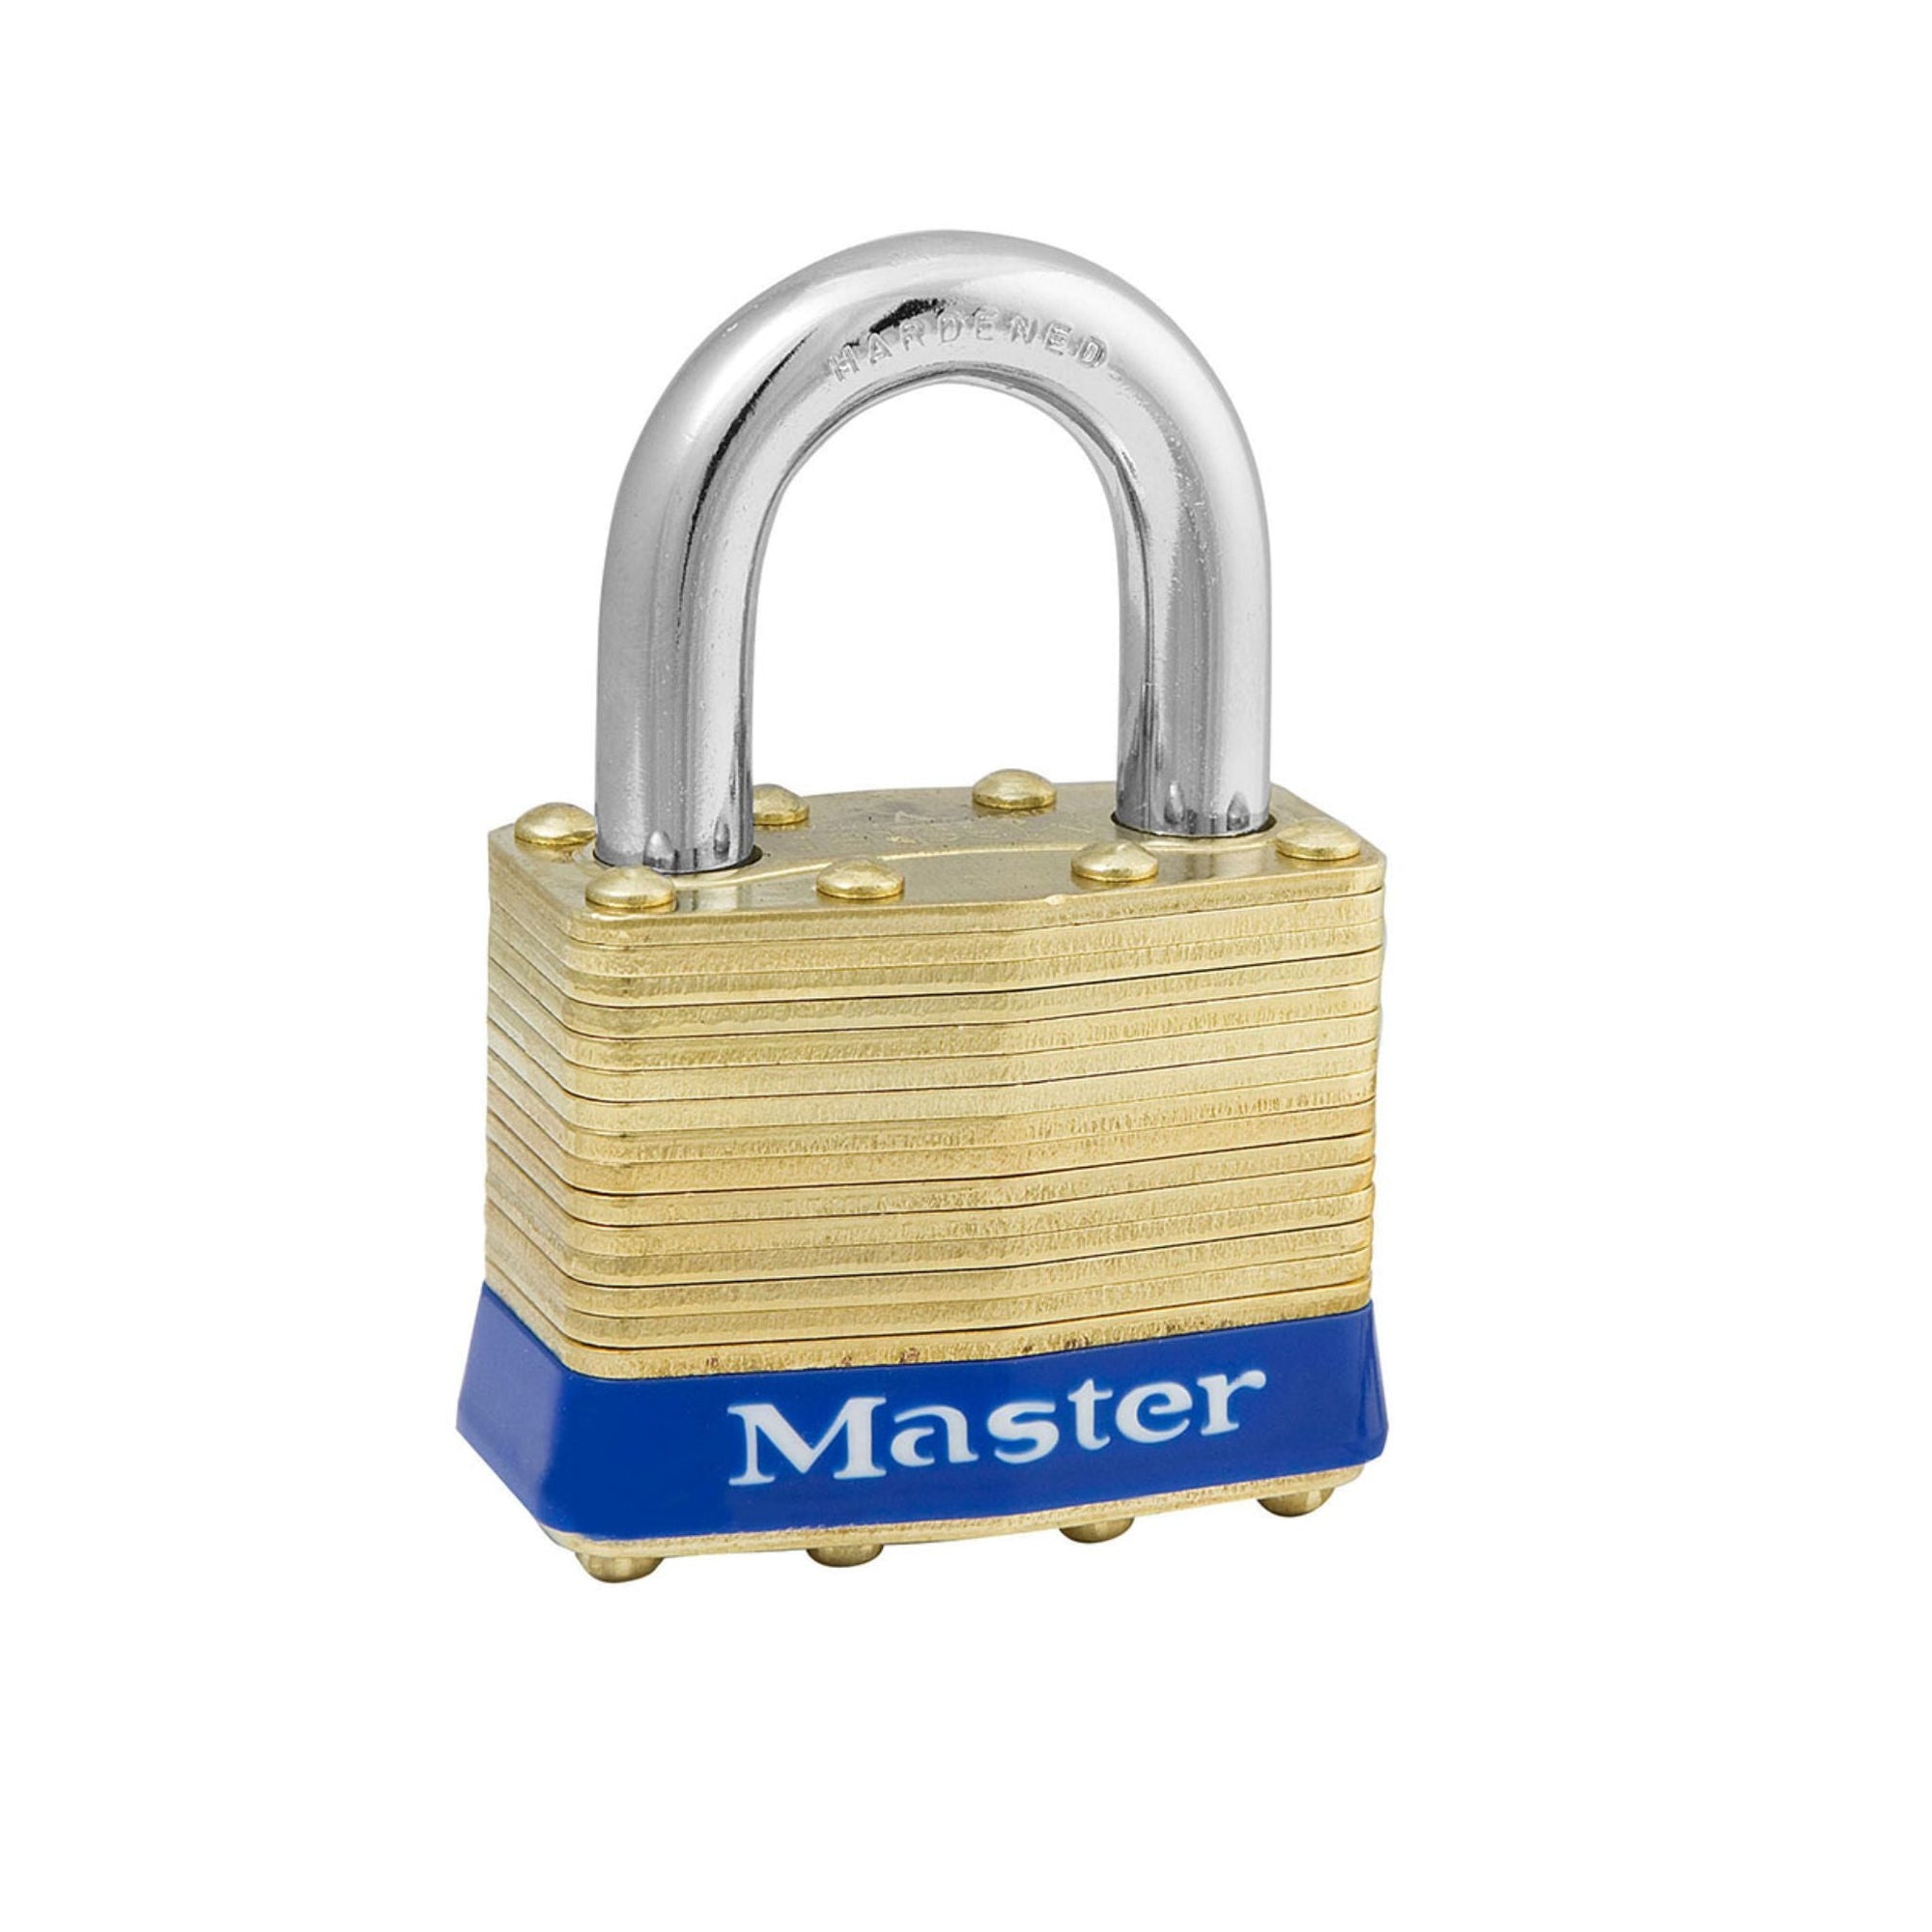 Master Lock 2KA 0305 Lock Laminated brass No. 2 Series Padlock Keyed to Match Existing Key Number KA0305 - The Lock Source